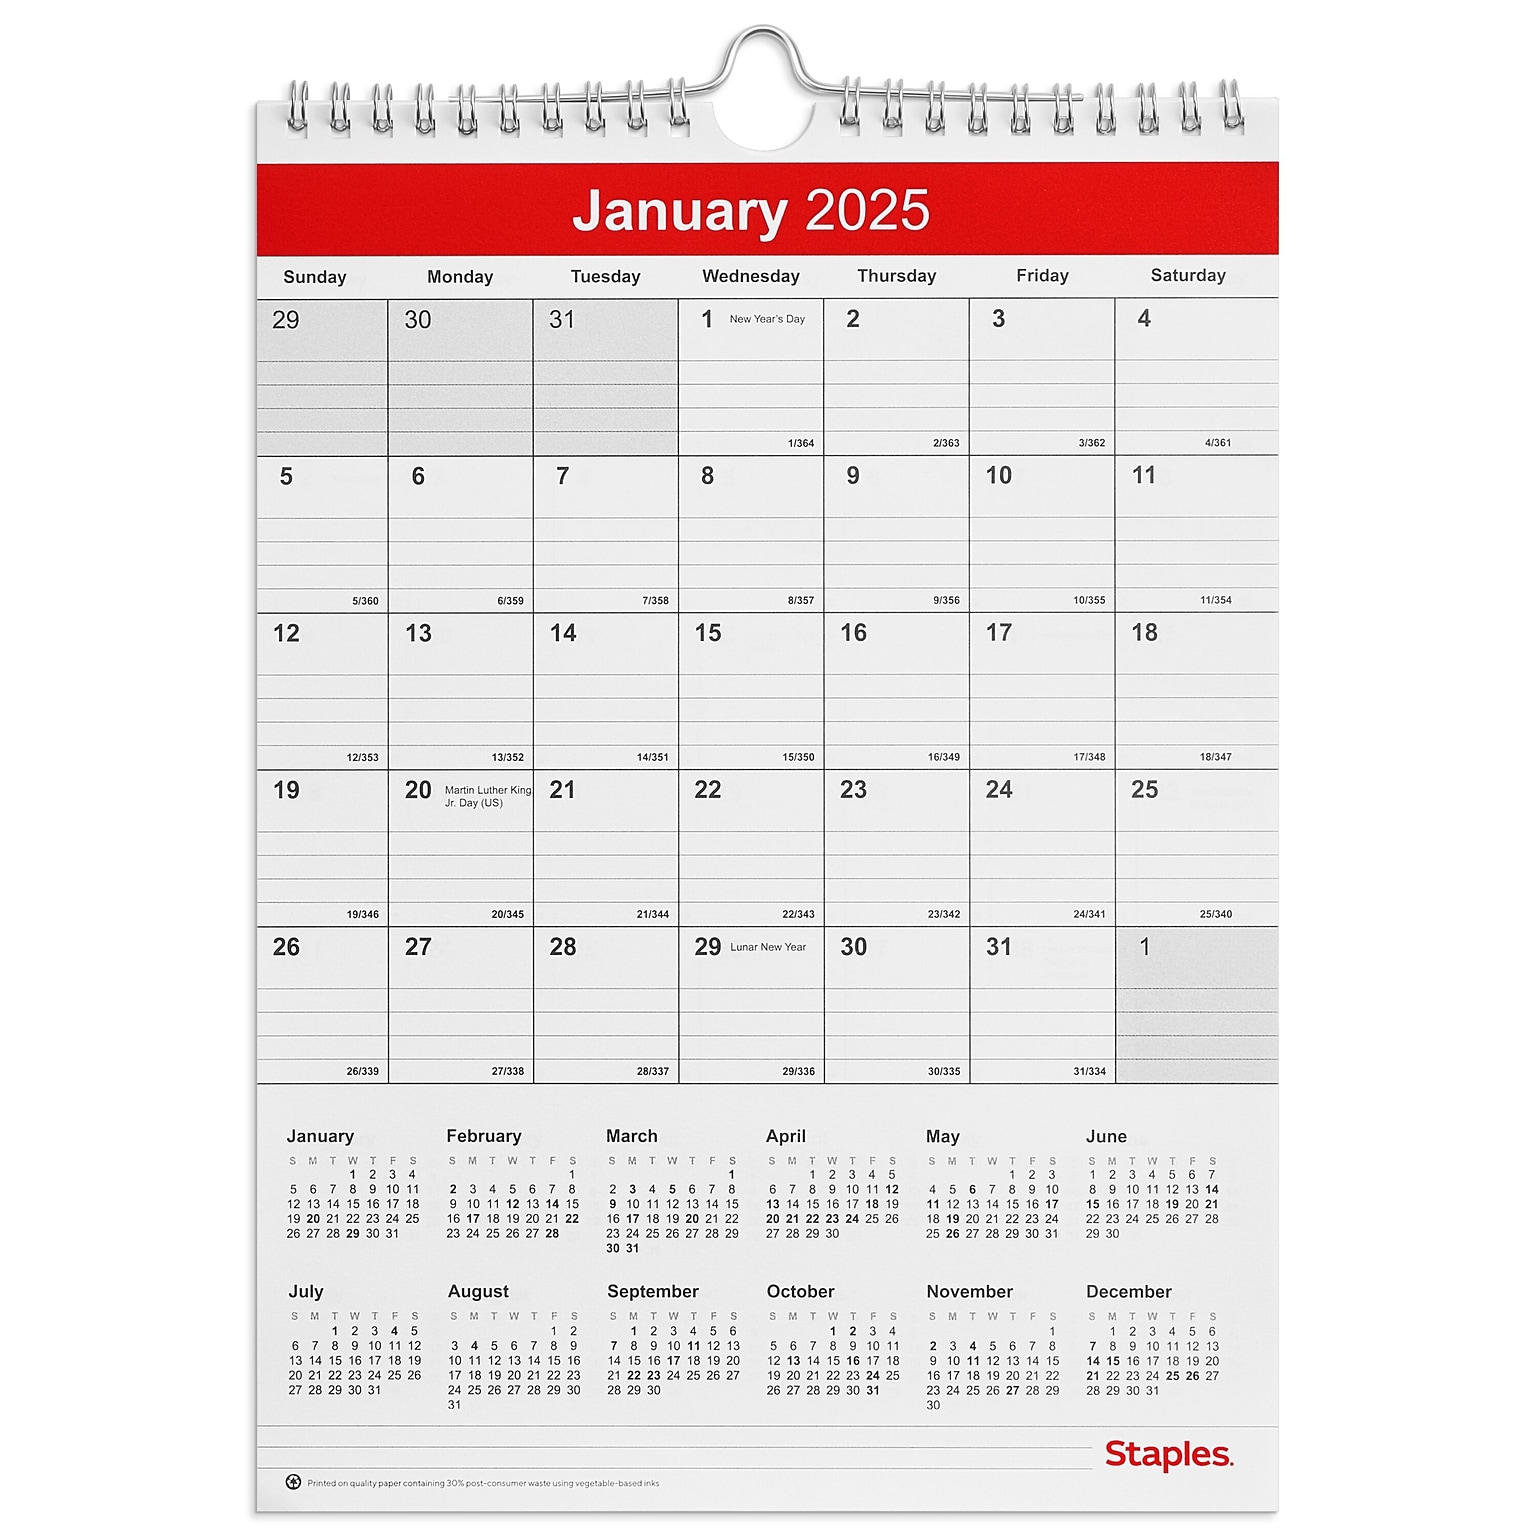 2025 Staples 8 x 11 Wall Calendar, Red/White (ST53922-25)